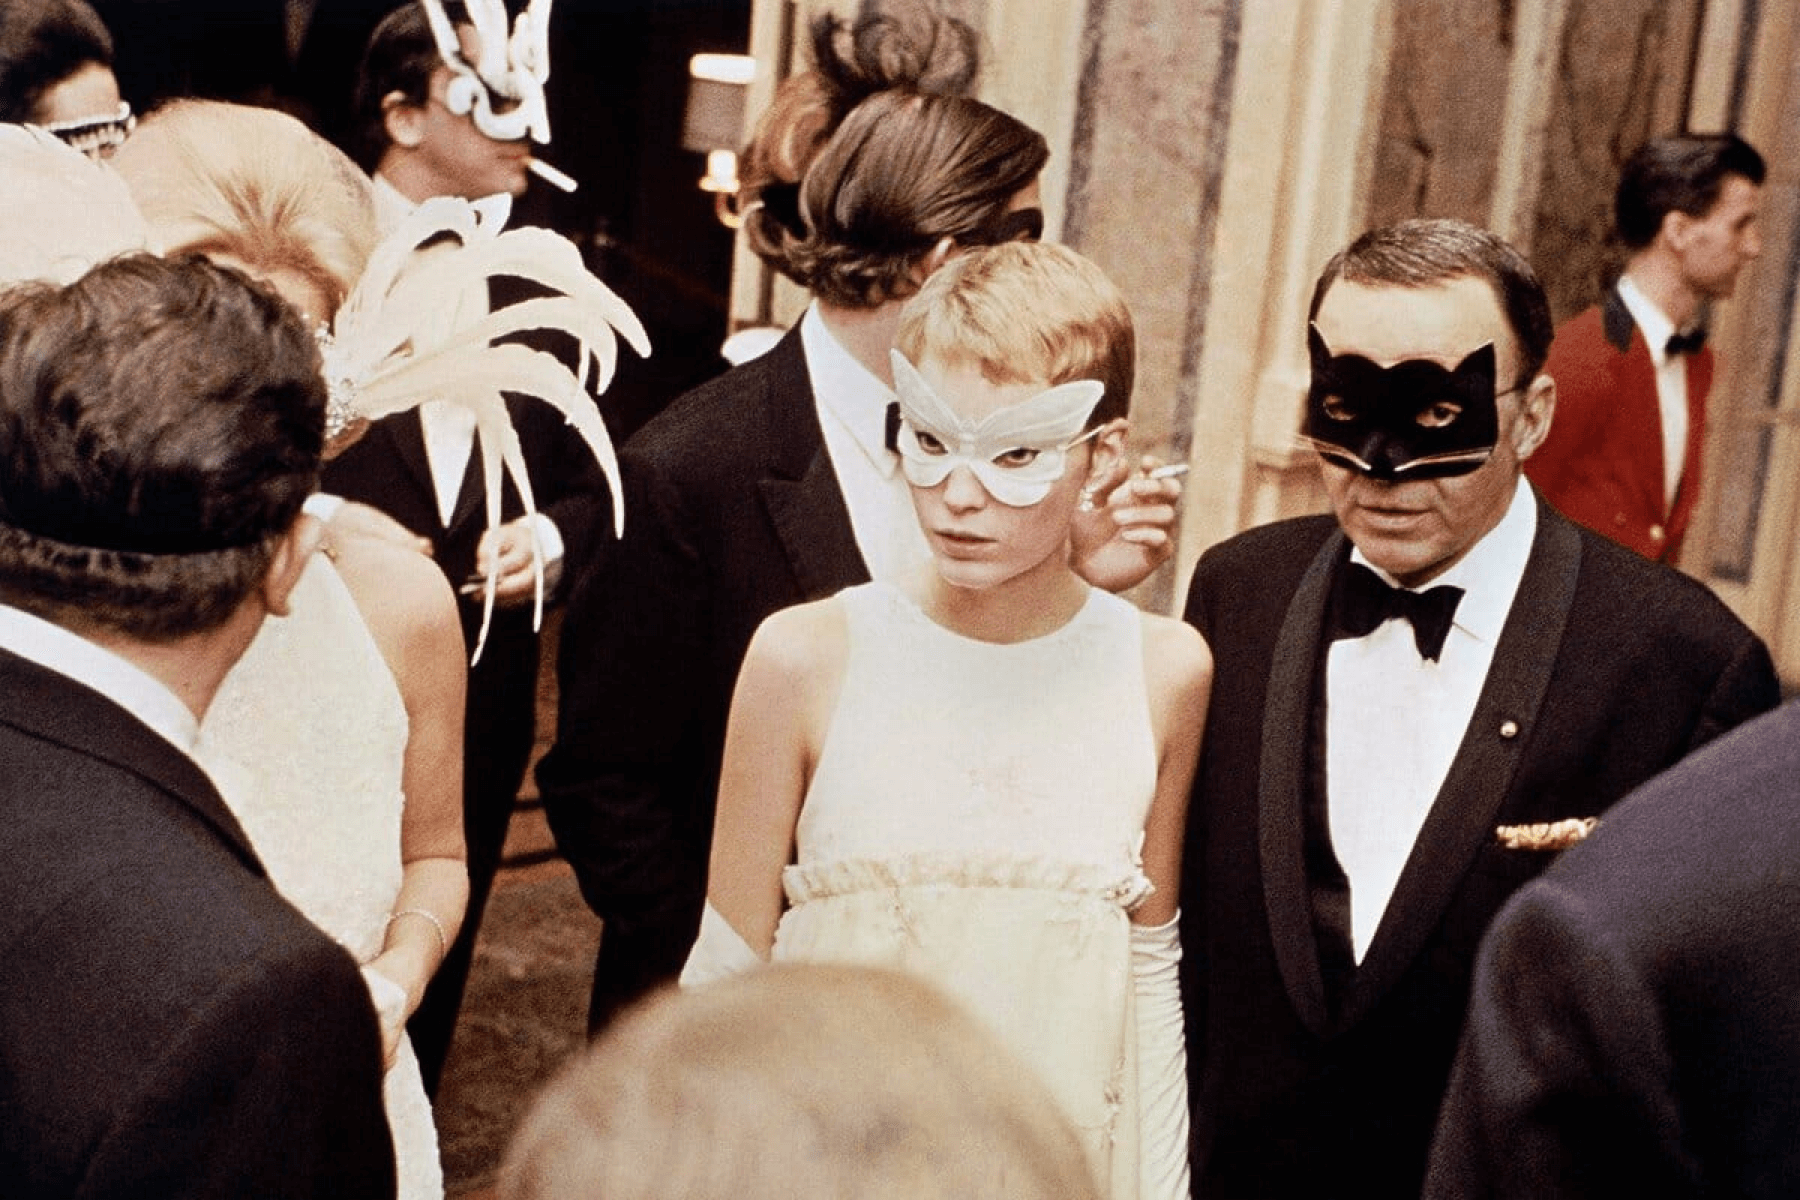 A vintage photograph of Mia Farrow and Frank Sinatra wearing masks and formalwear at a masquerade ball.